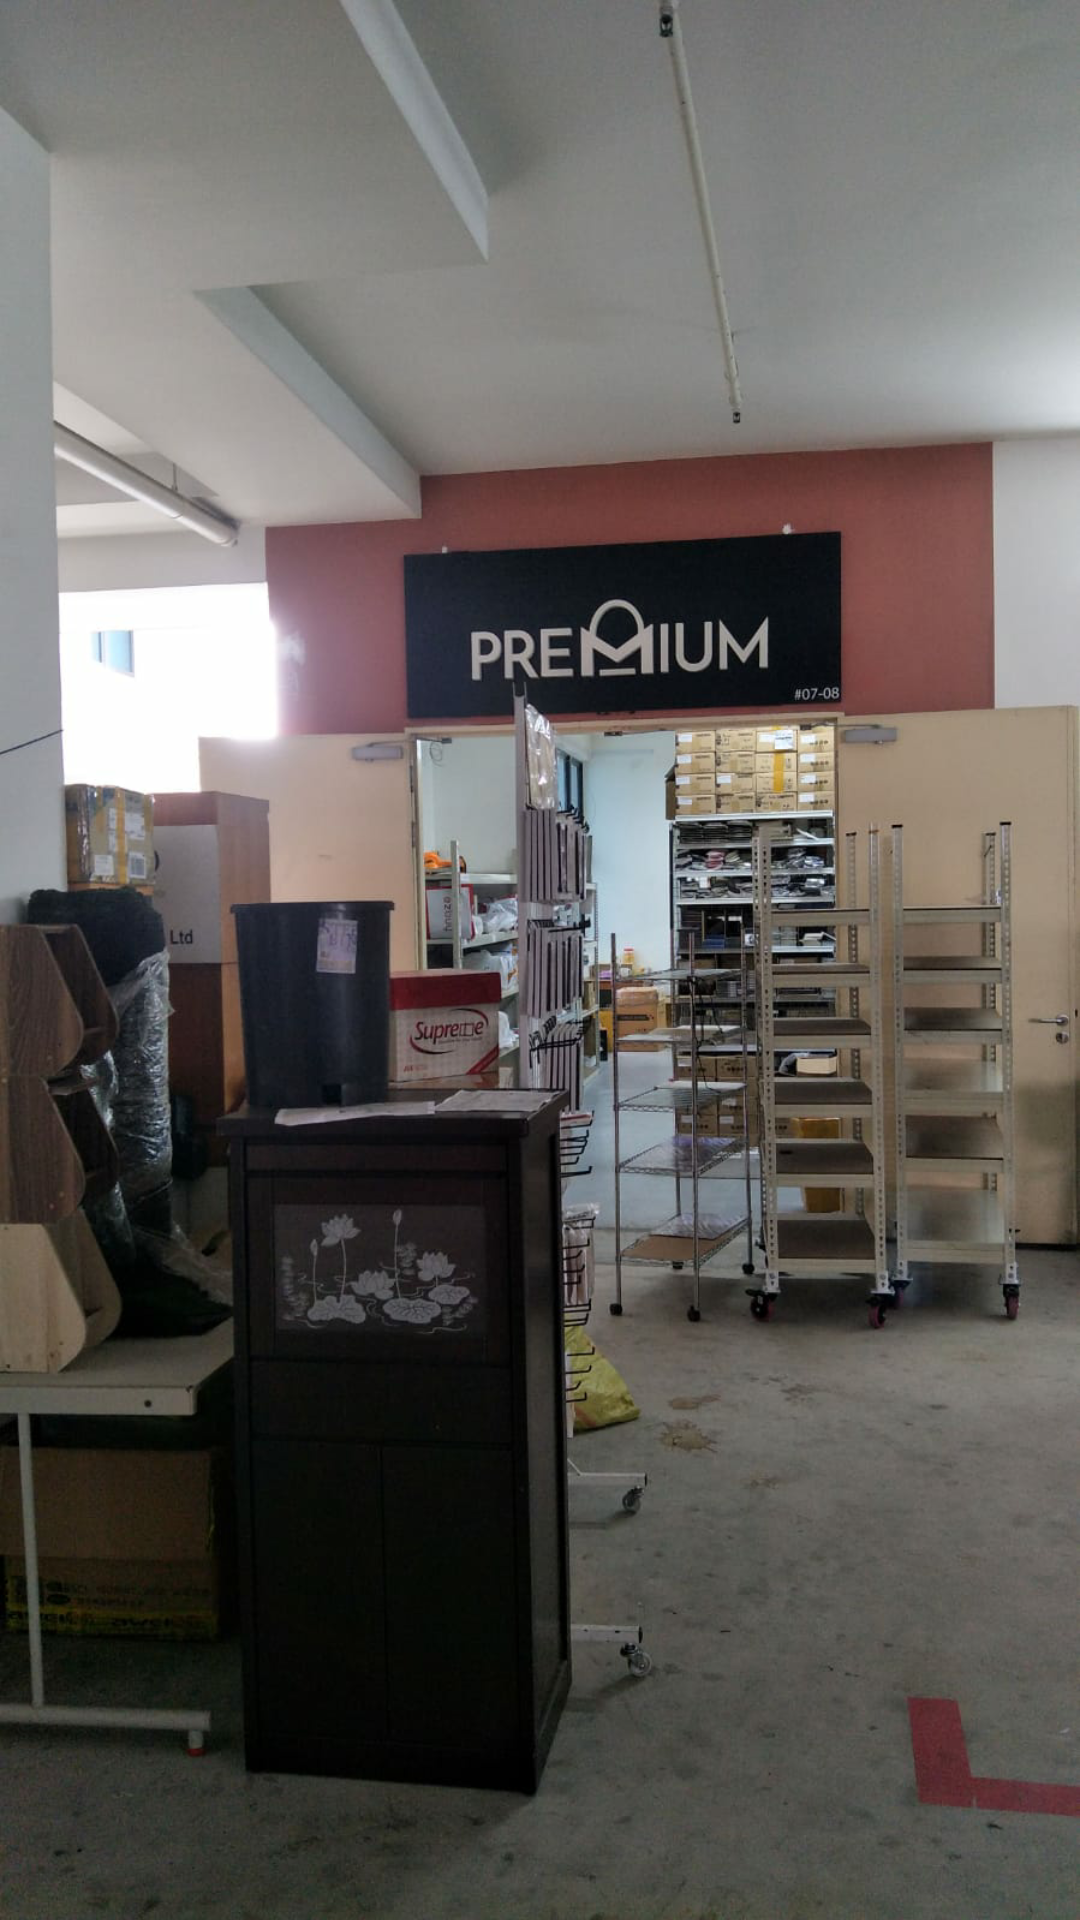 PREMIUM SG - Warehouse